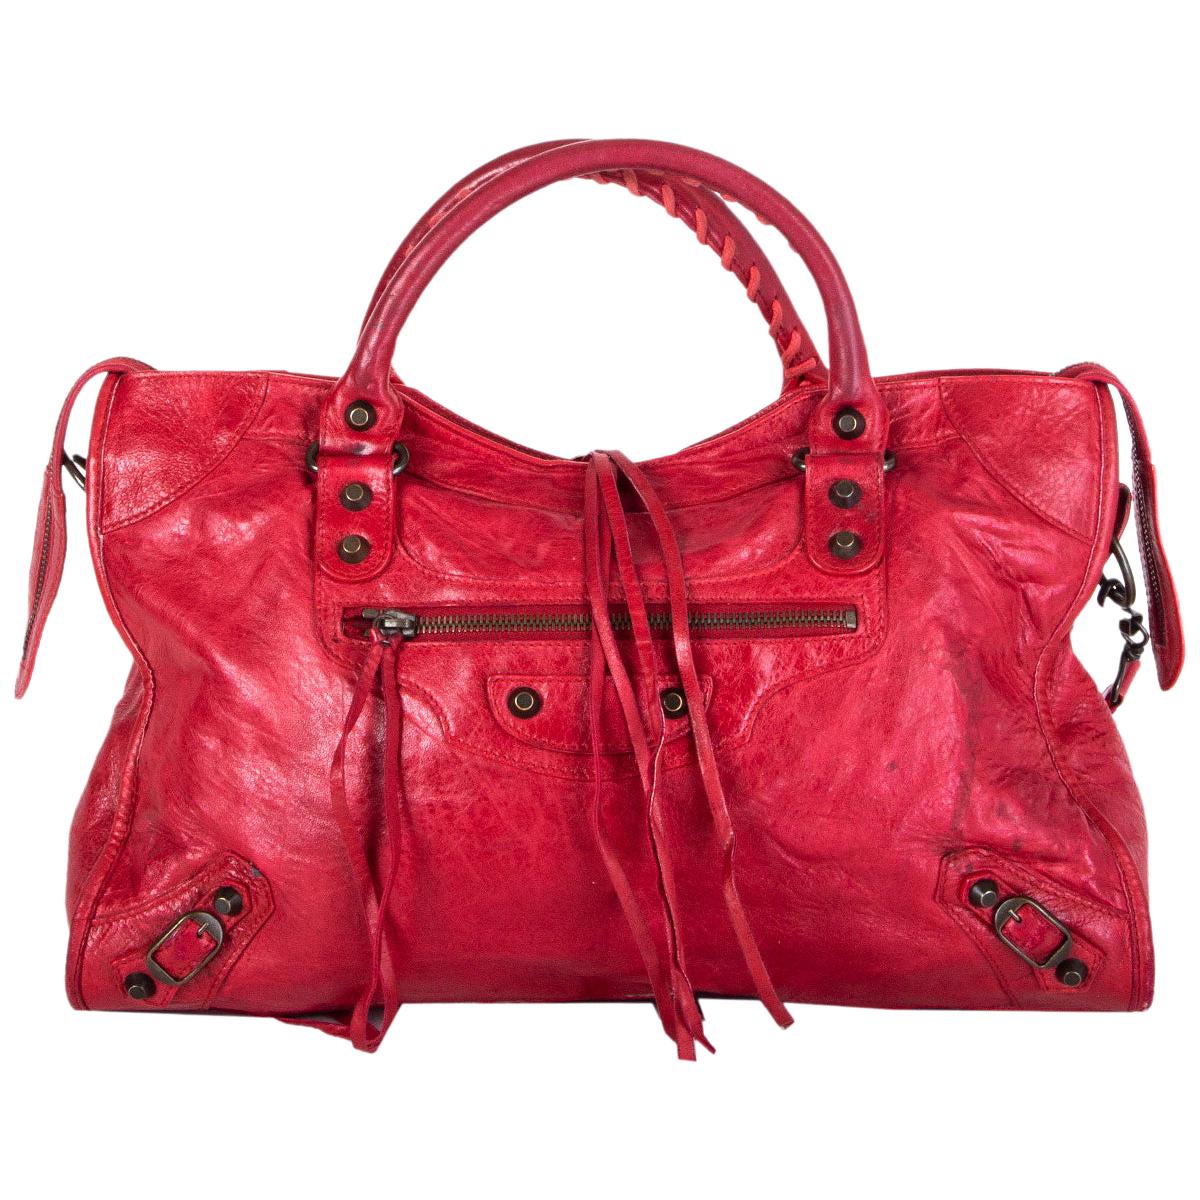 BALENCIAGA red leather CLASSIC CITY MEDIUM Bag